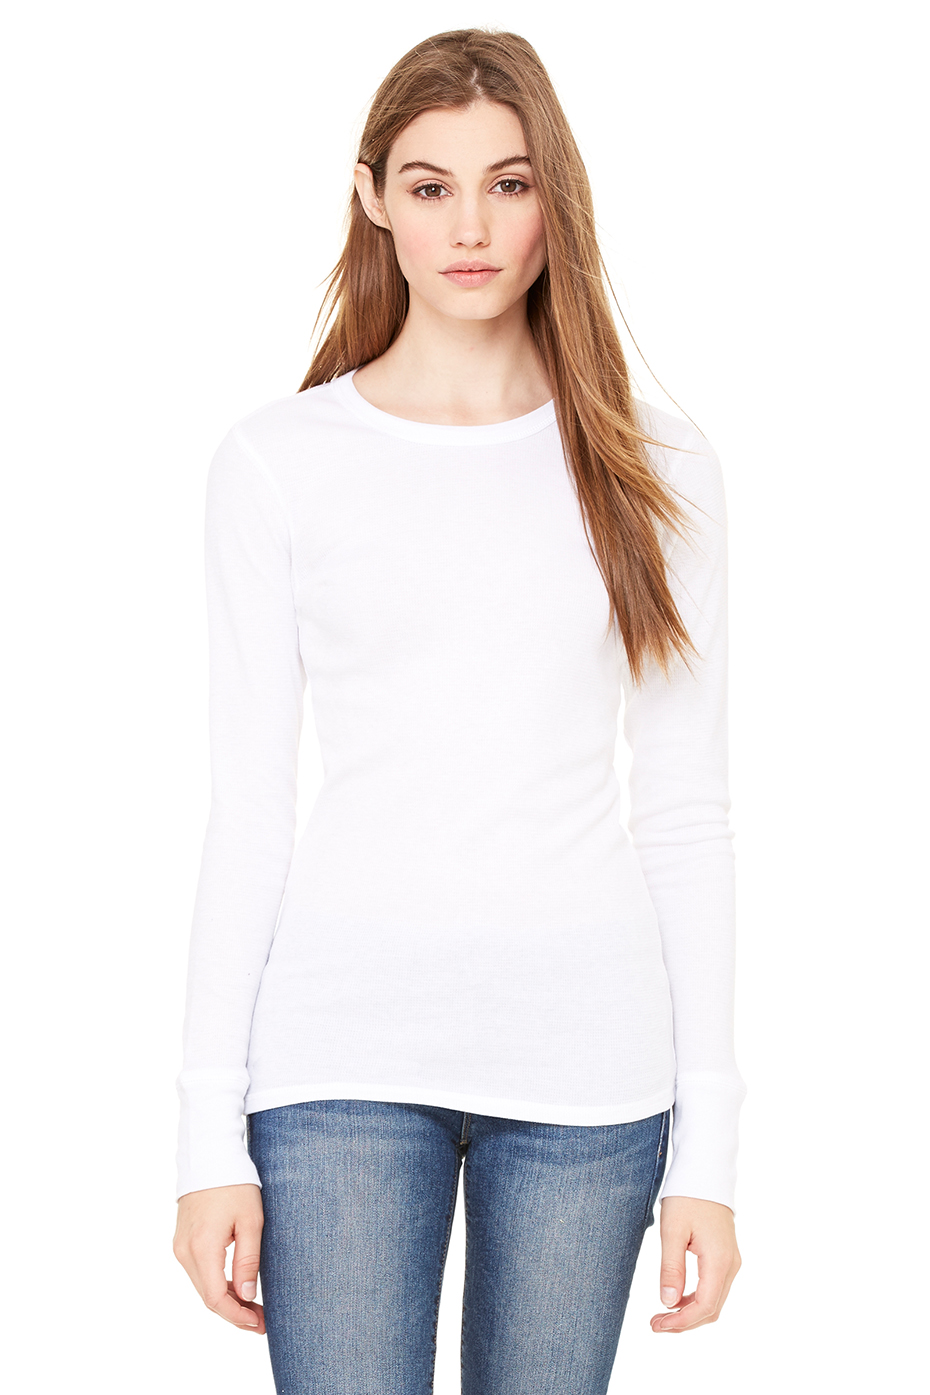 women's long sleeve sweatshirts